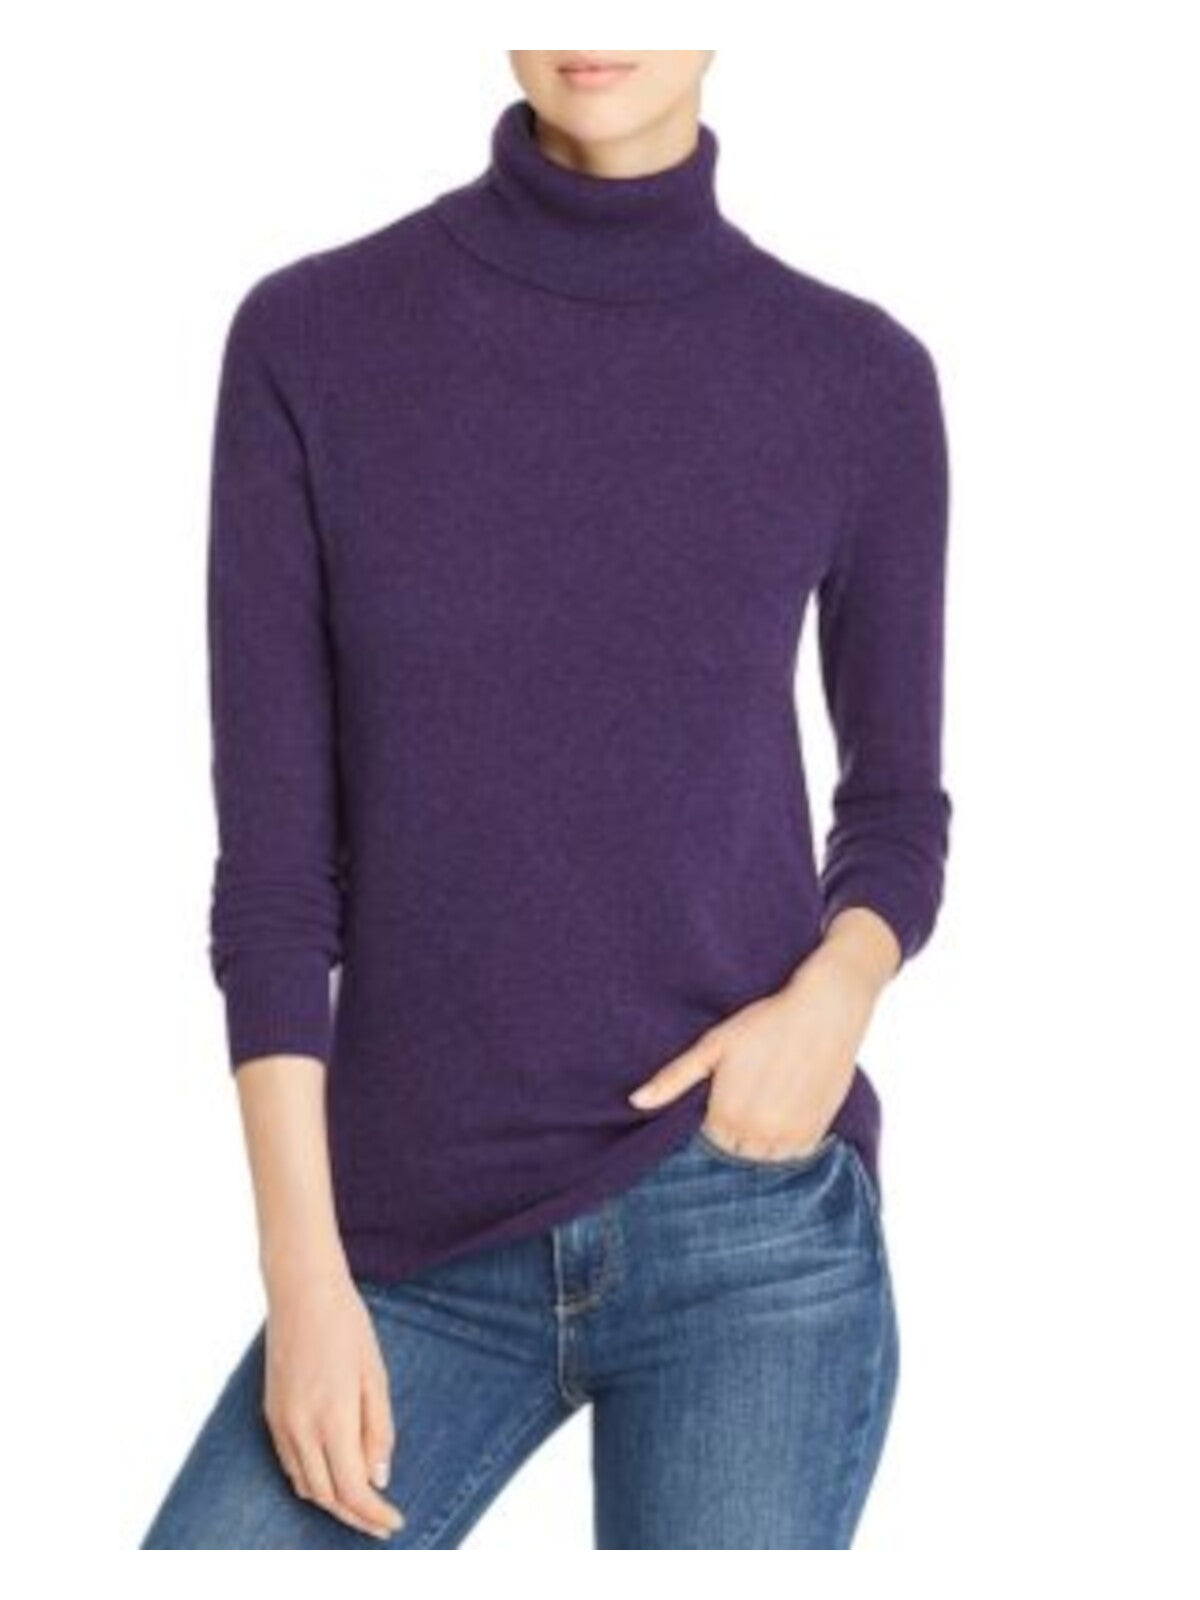 Designer Brand Womens Purple Cashmere Long Sleeve Turtle Neck Wear To Work Sweater XS